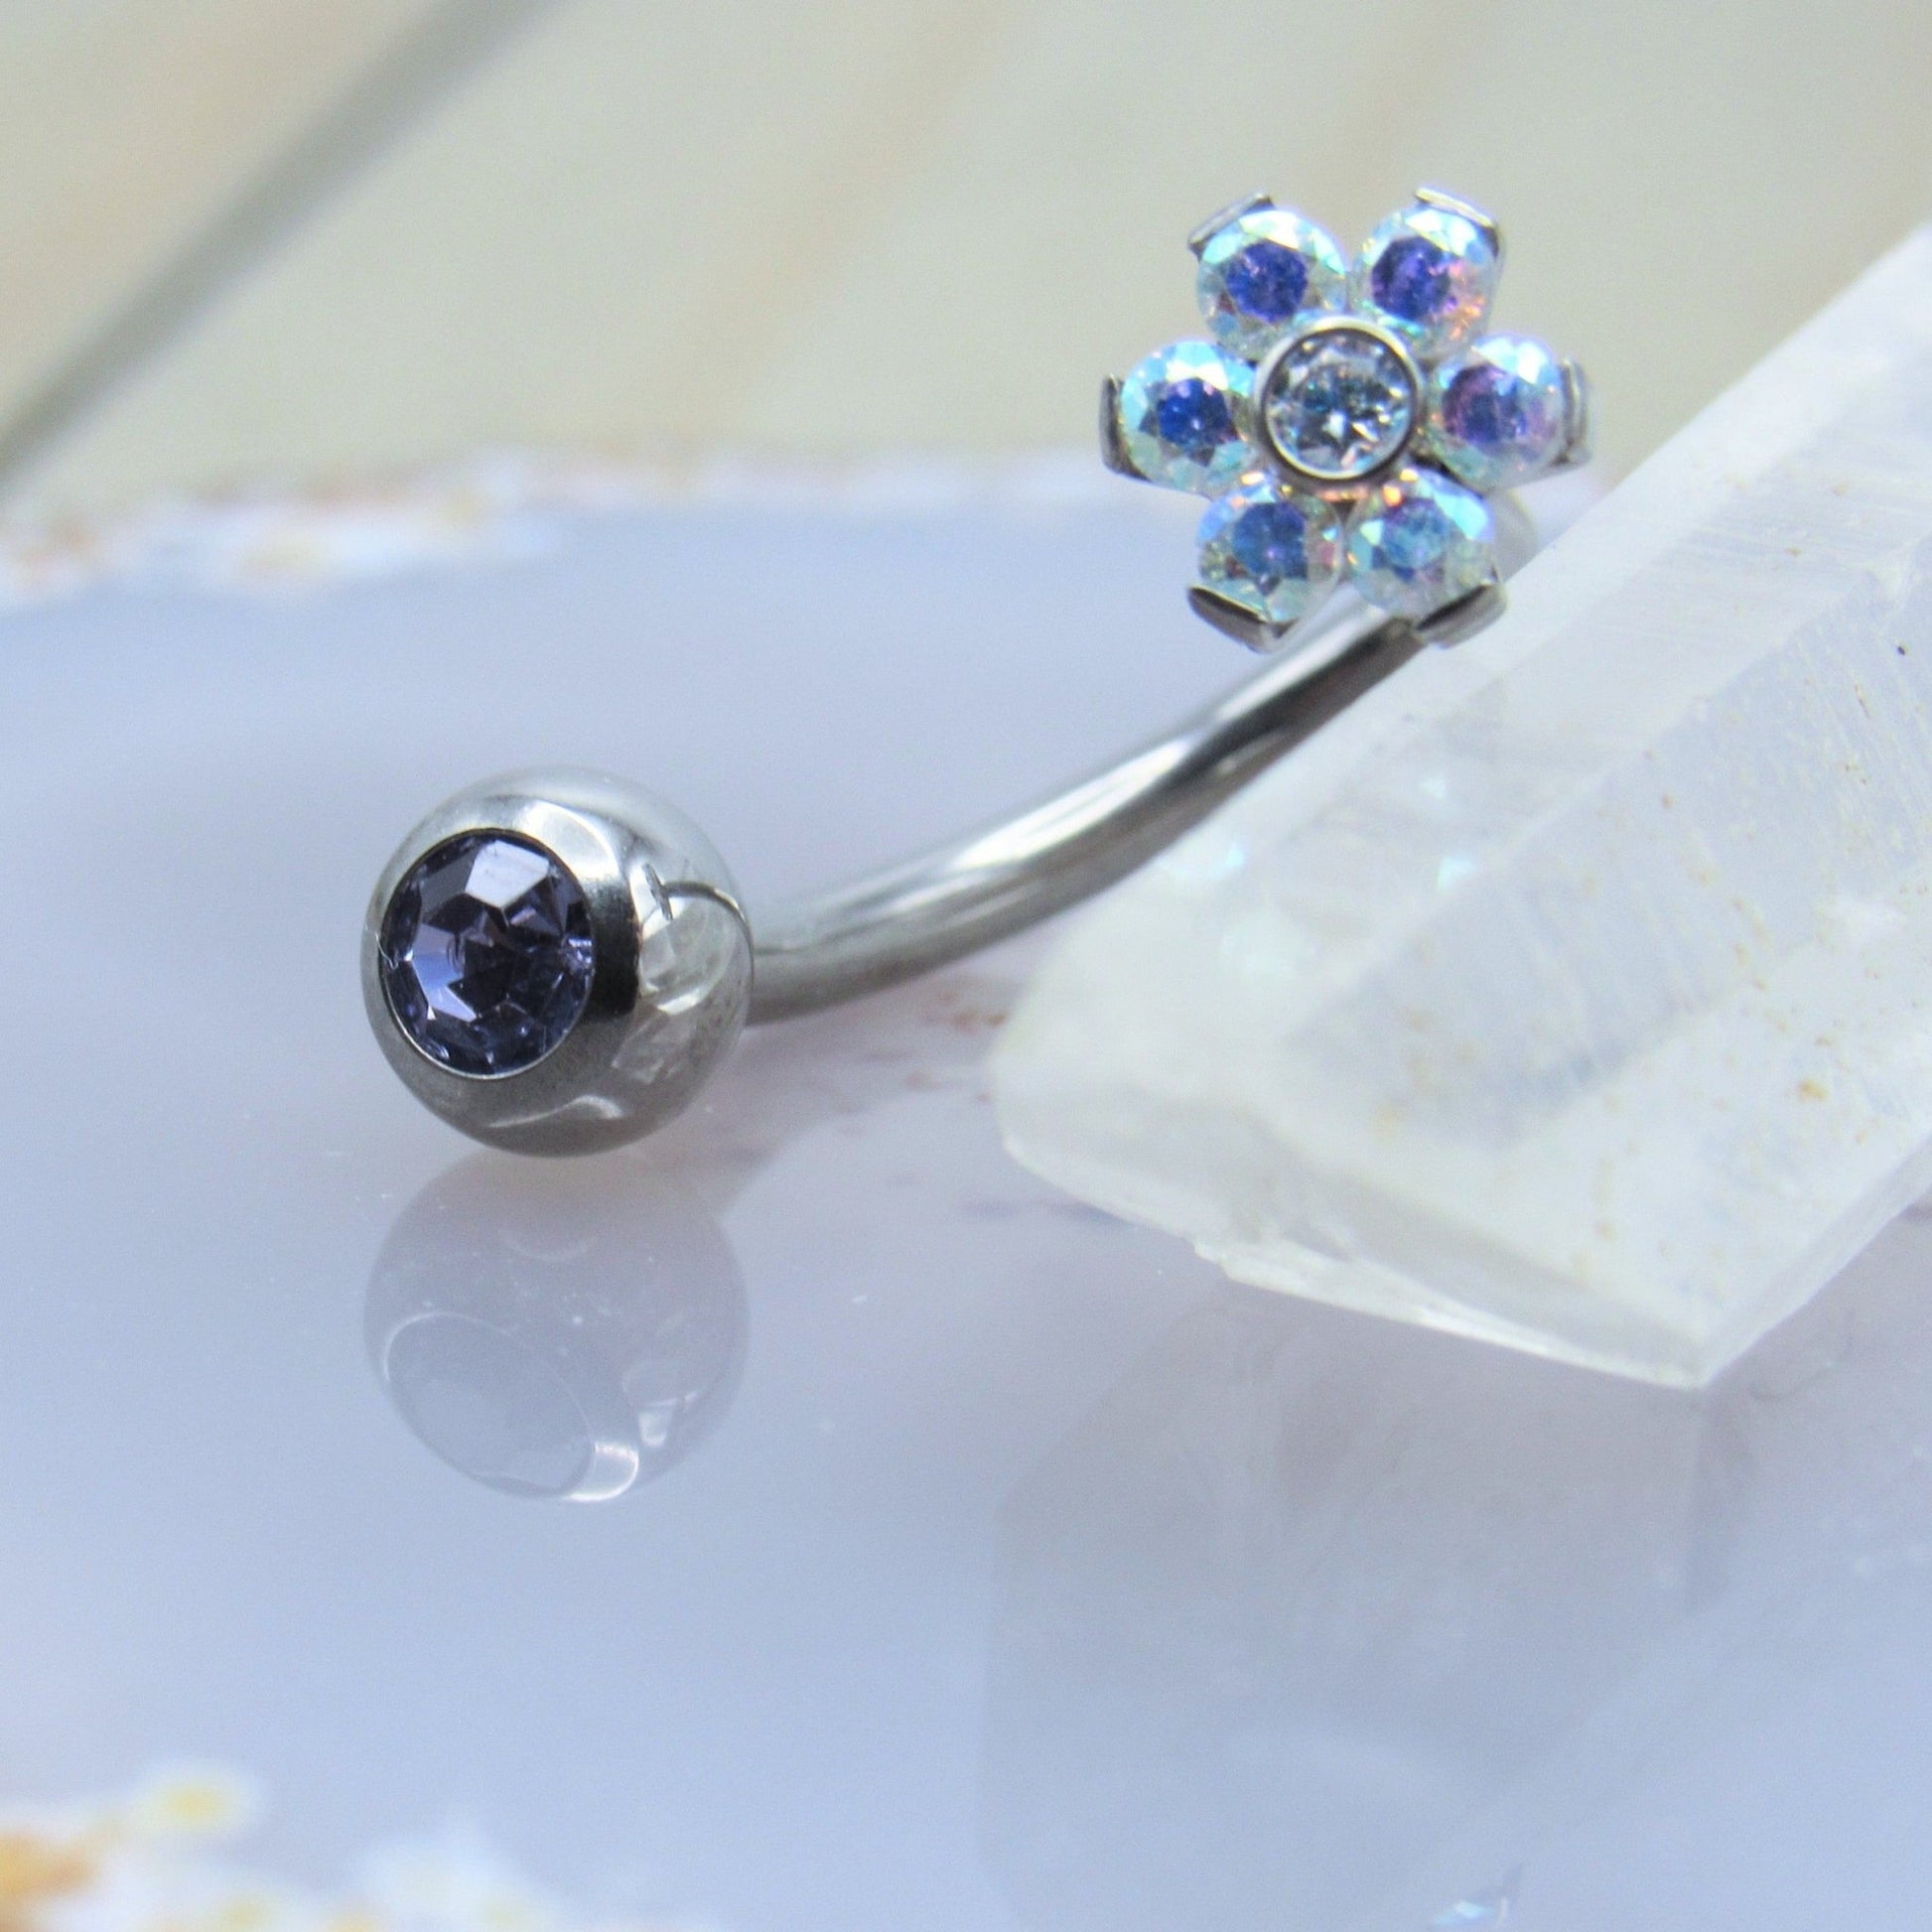 Flower gemstone belly button piercing ring 14g J curved floating navel style barbell titanium purple gemstone ball - Siren Body Jewelry